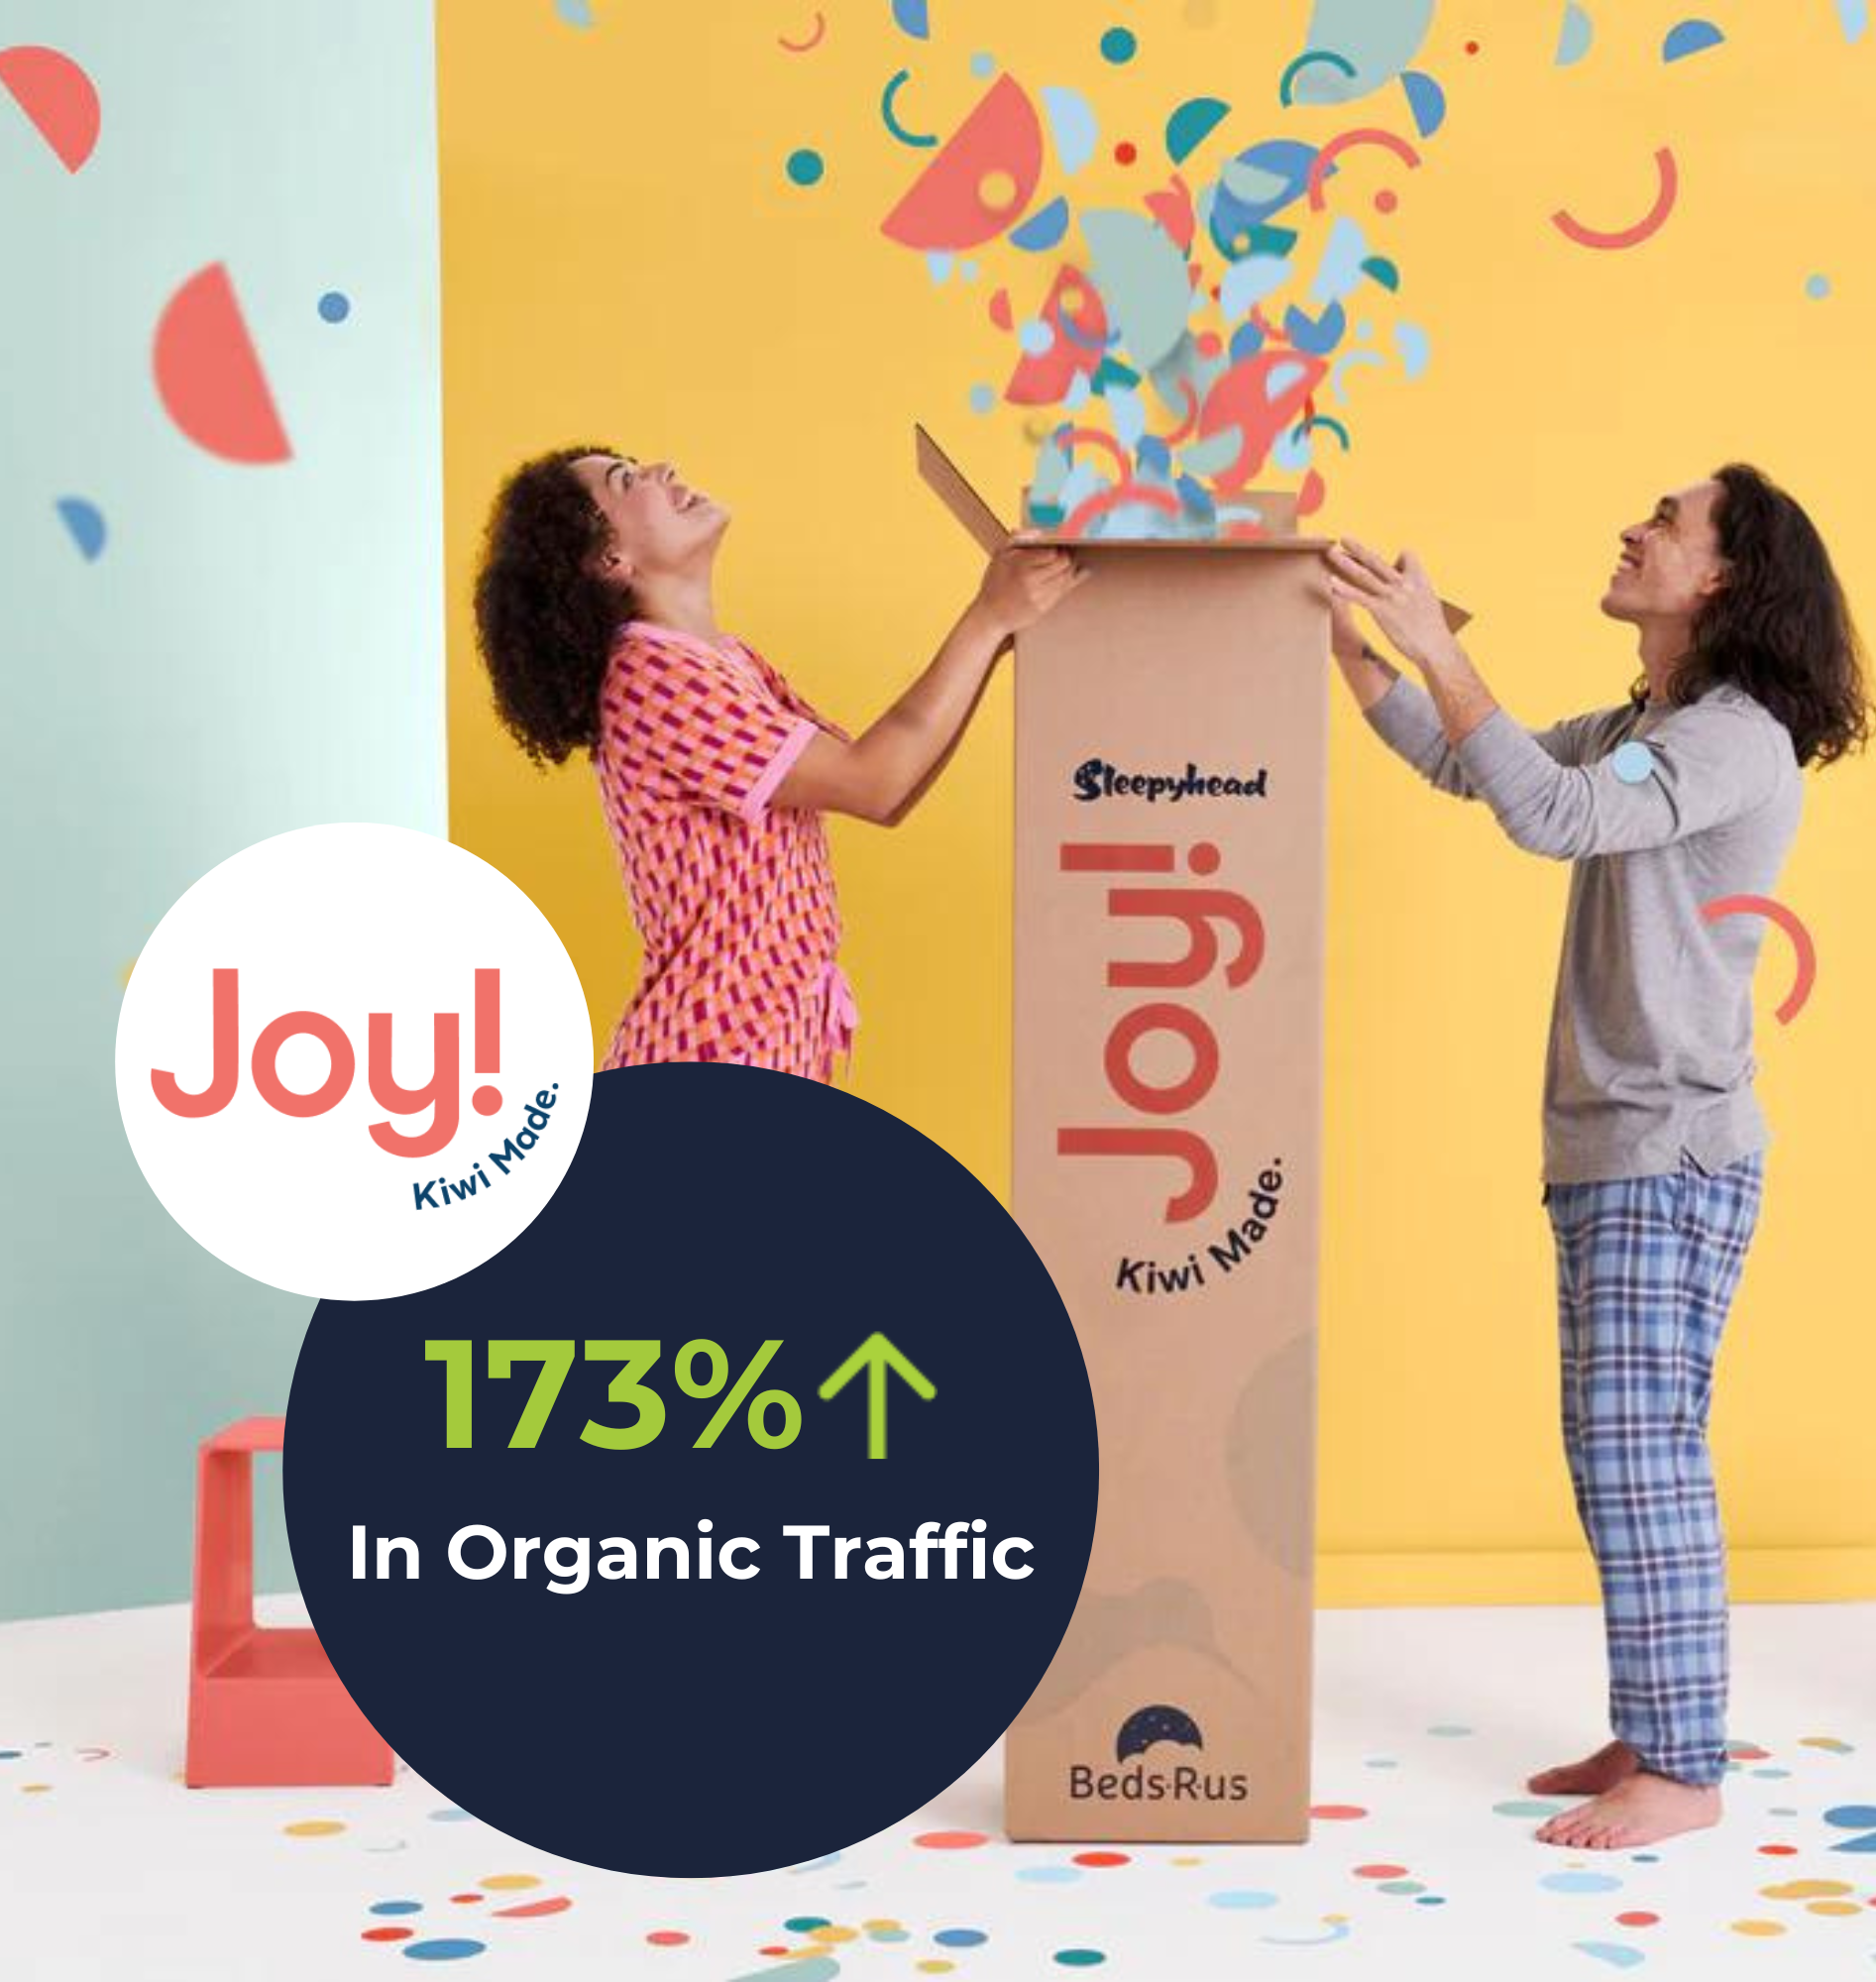 Joy 173% increase in Organic traffic